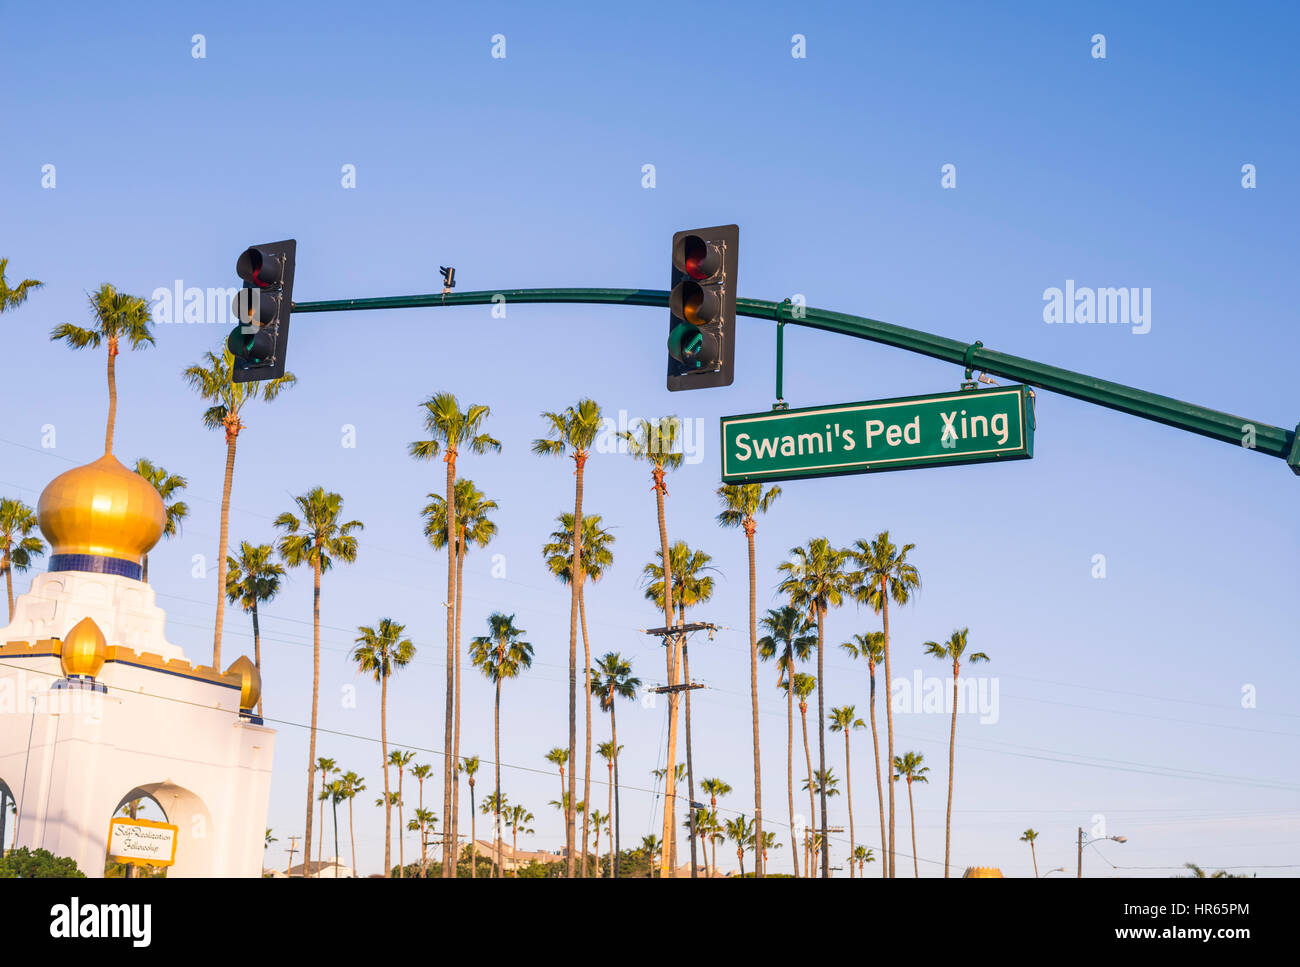 Swami's Ped Xing signo, signo de cruce peatonal. Encinitas, California. Foto de stock